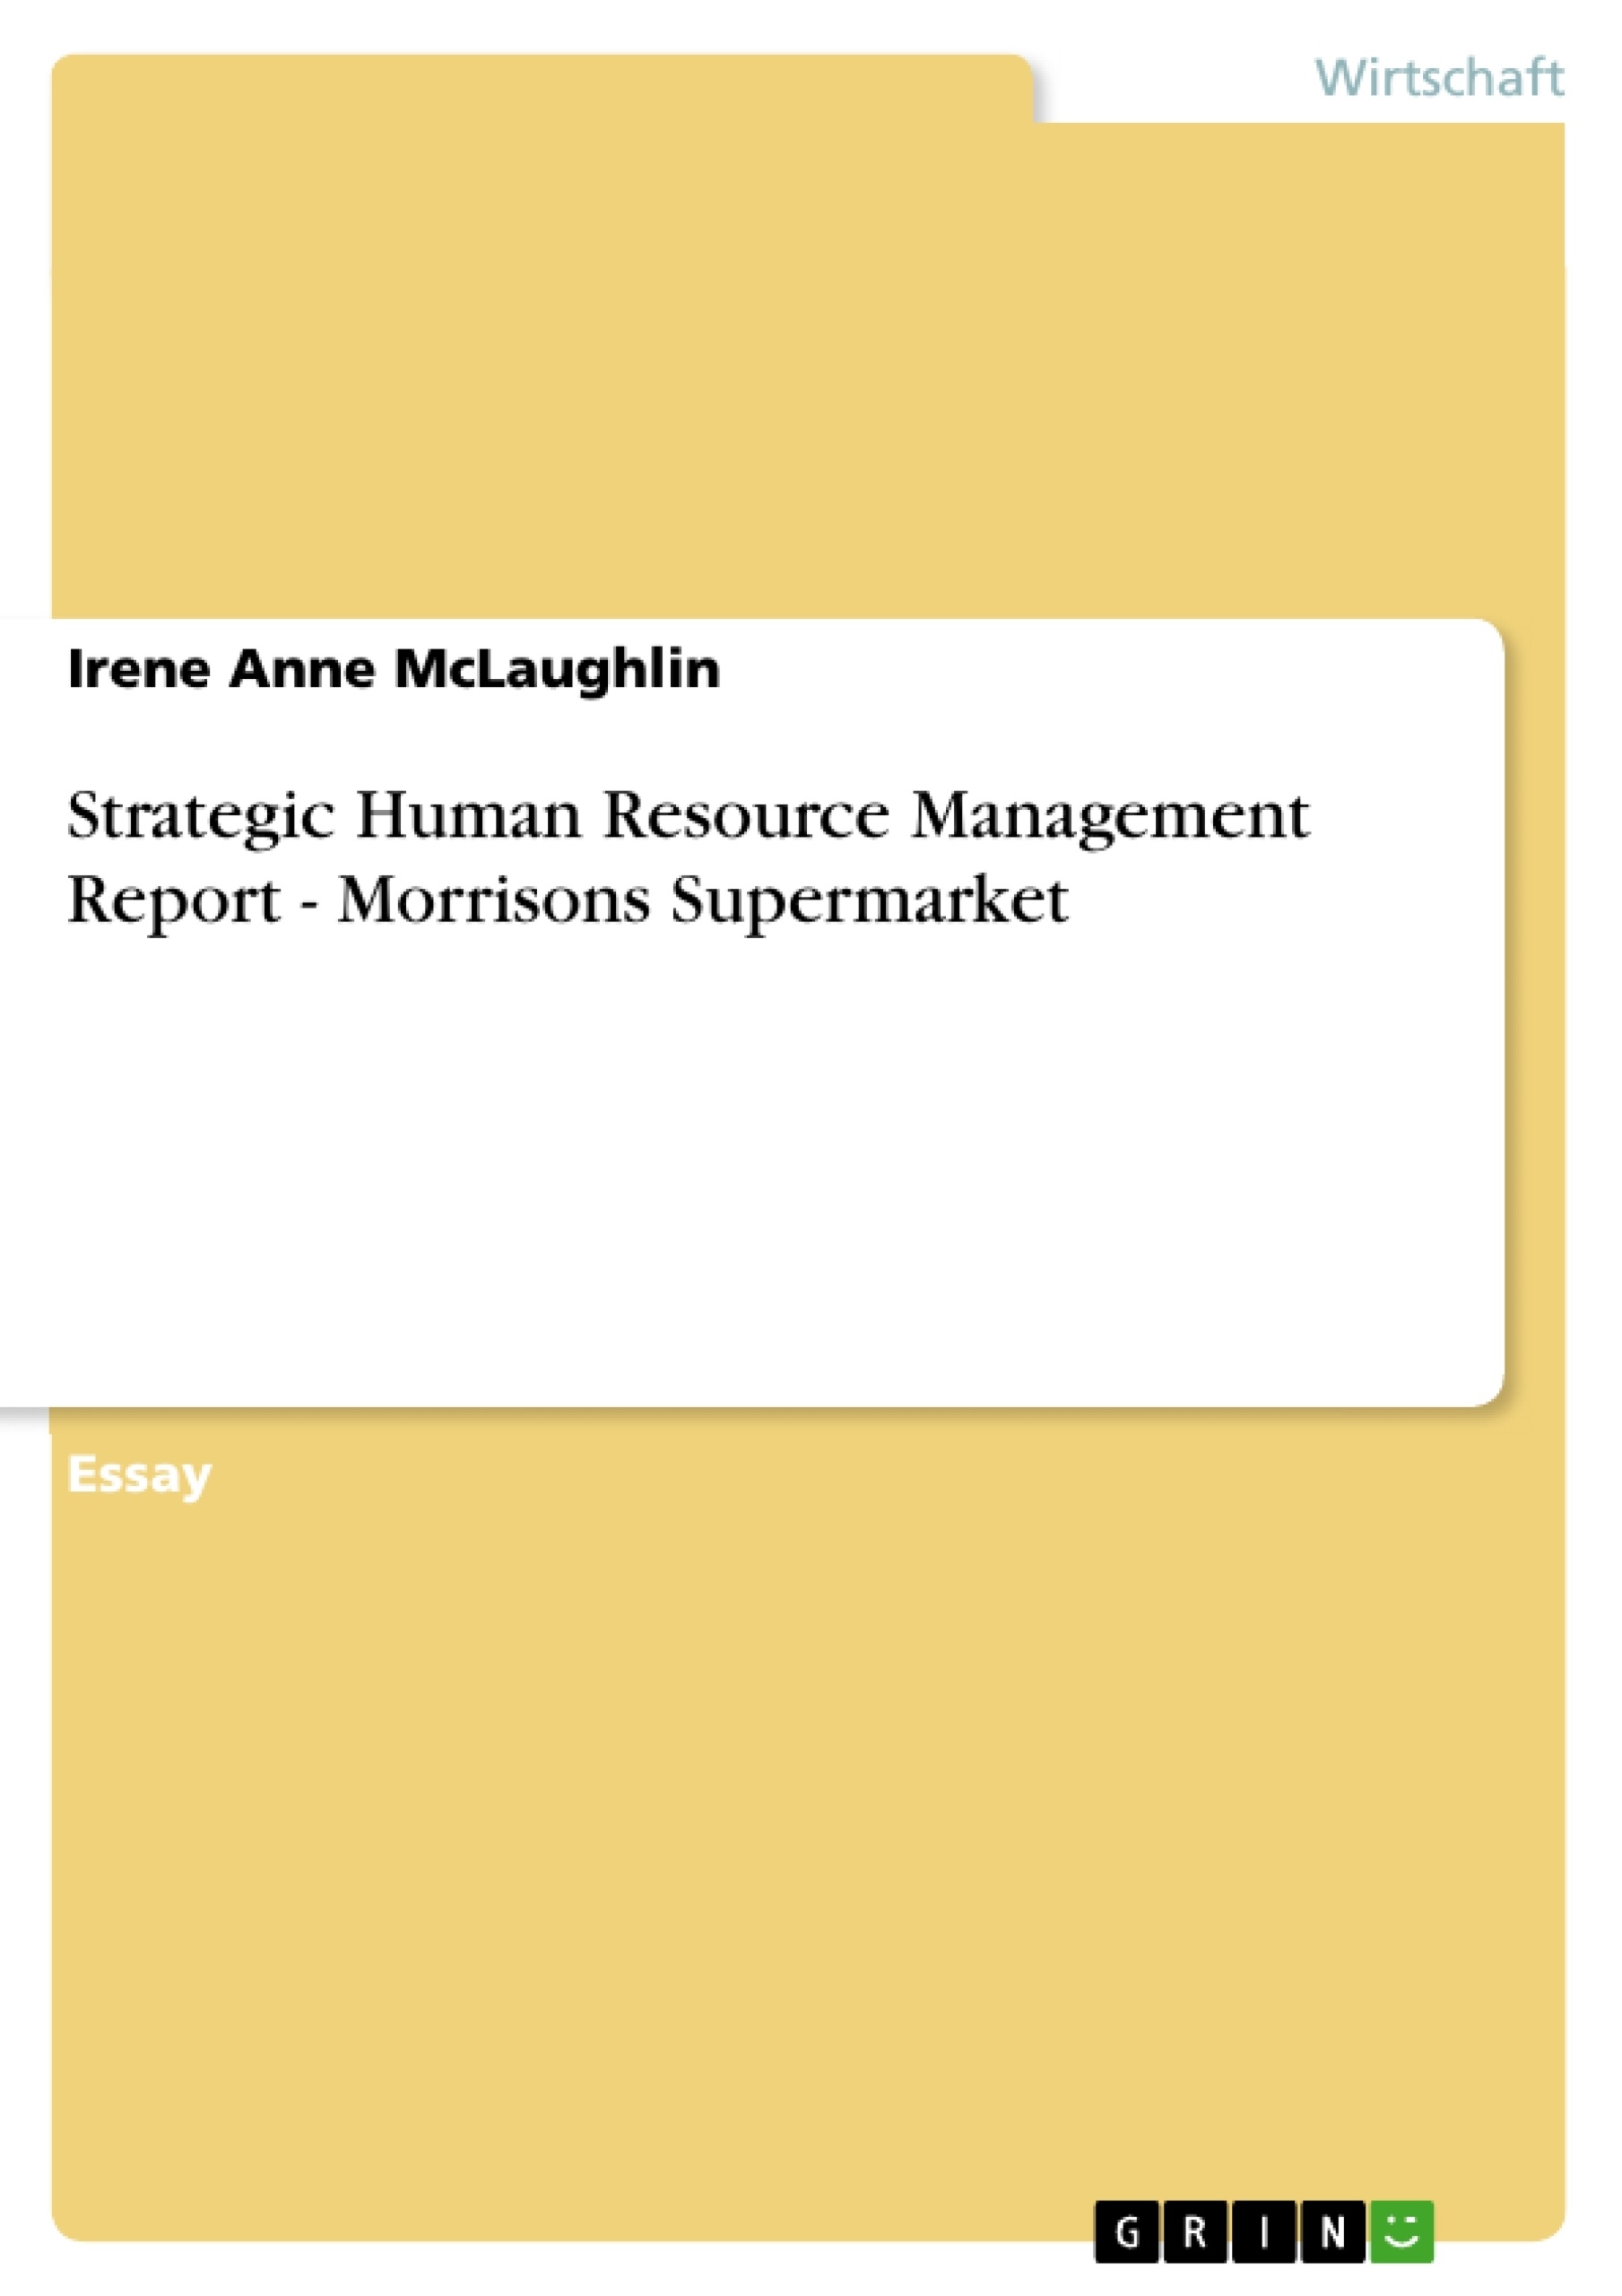 Titel: Strategic Human Resource Management Report - Morrisons Supermarket